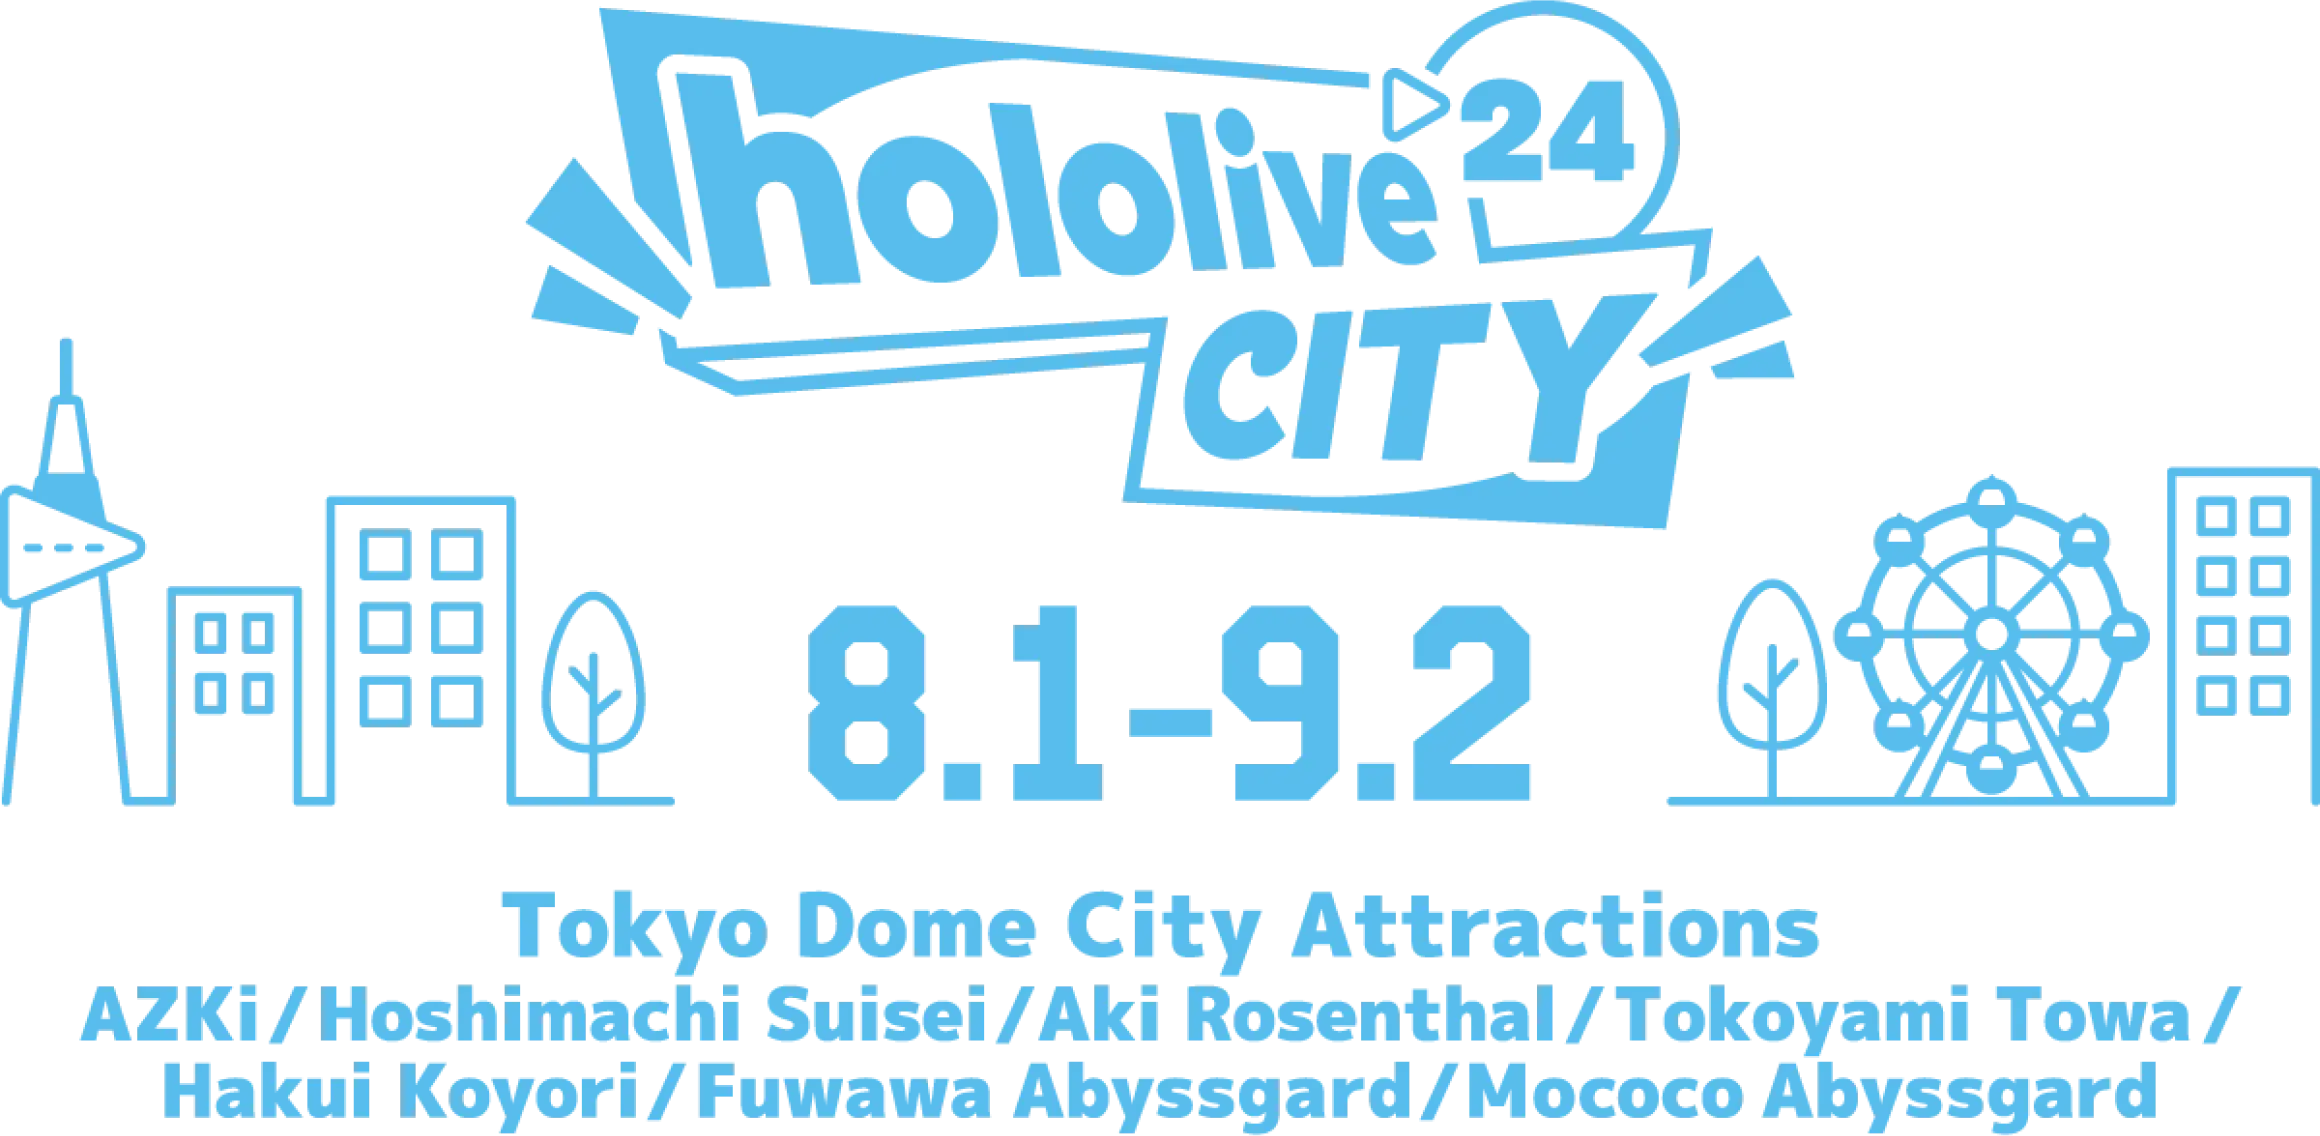 hololive 24 8.1-9.2 Tokyo Dome City Attractions AZKi/Hoshimachi Suisei/Aki Rosenthal/Tokoyami Towa/Hakui Koyori/Fuwawa Abyssgard/Mococo Abyssgard